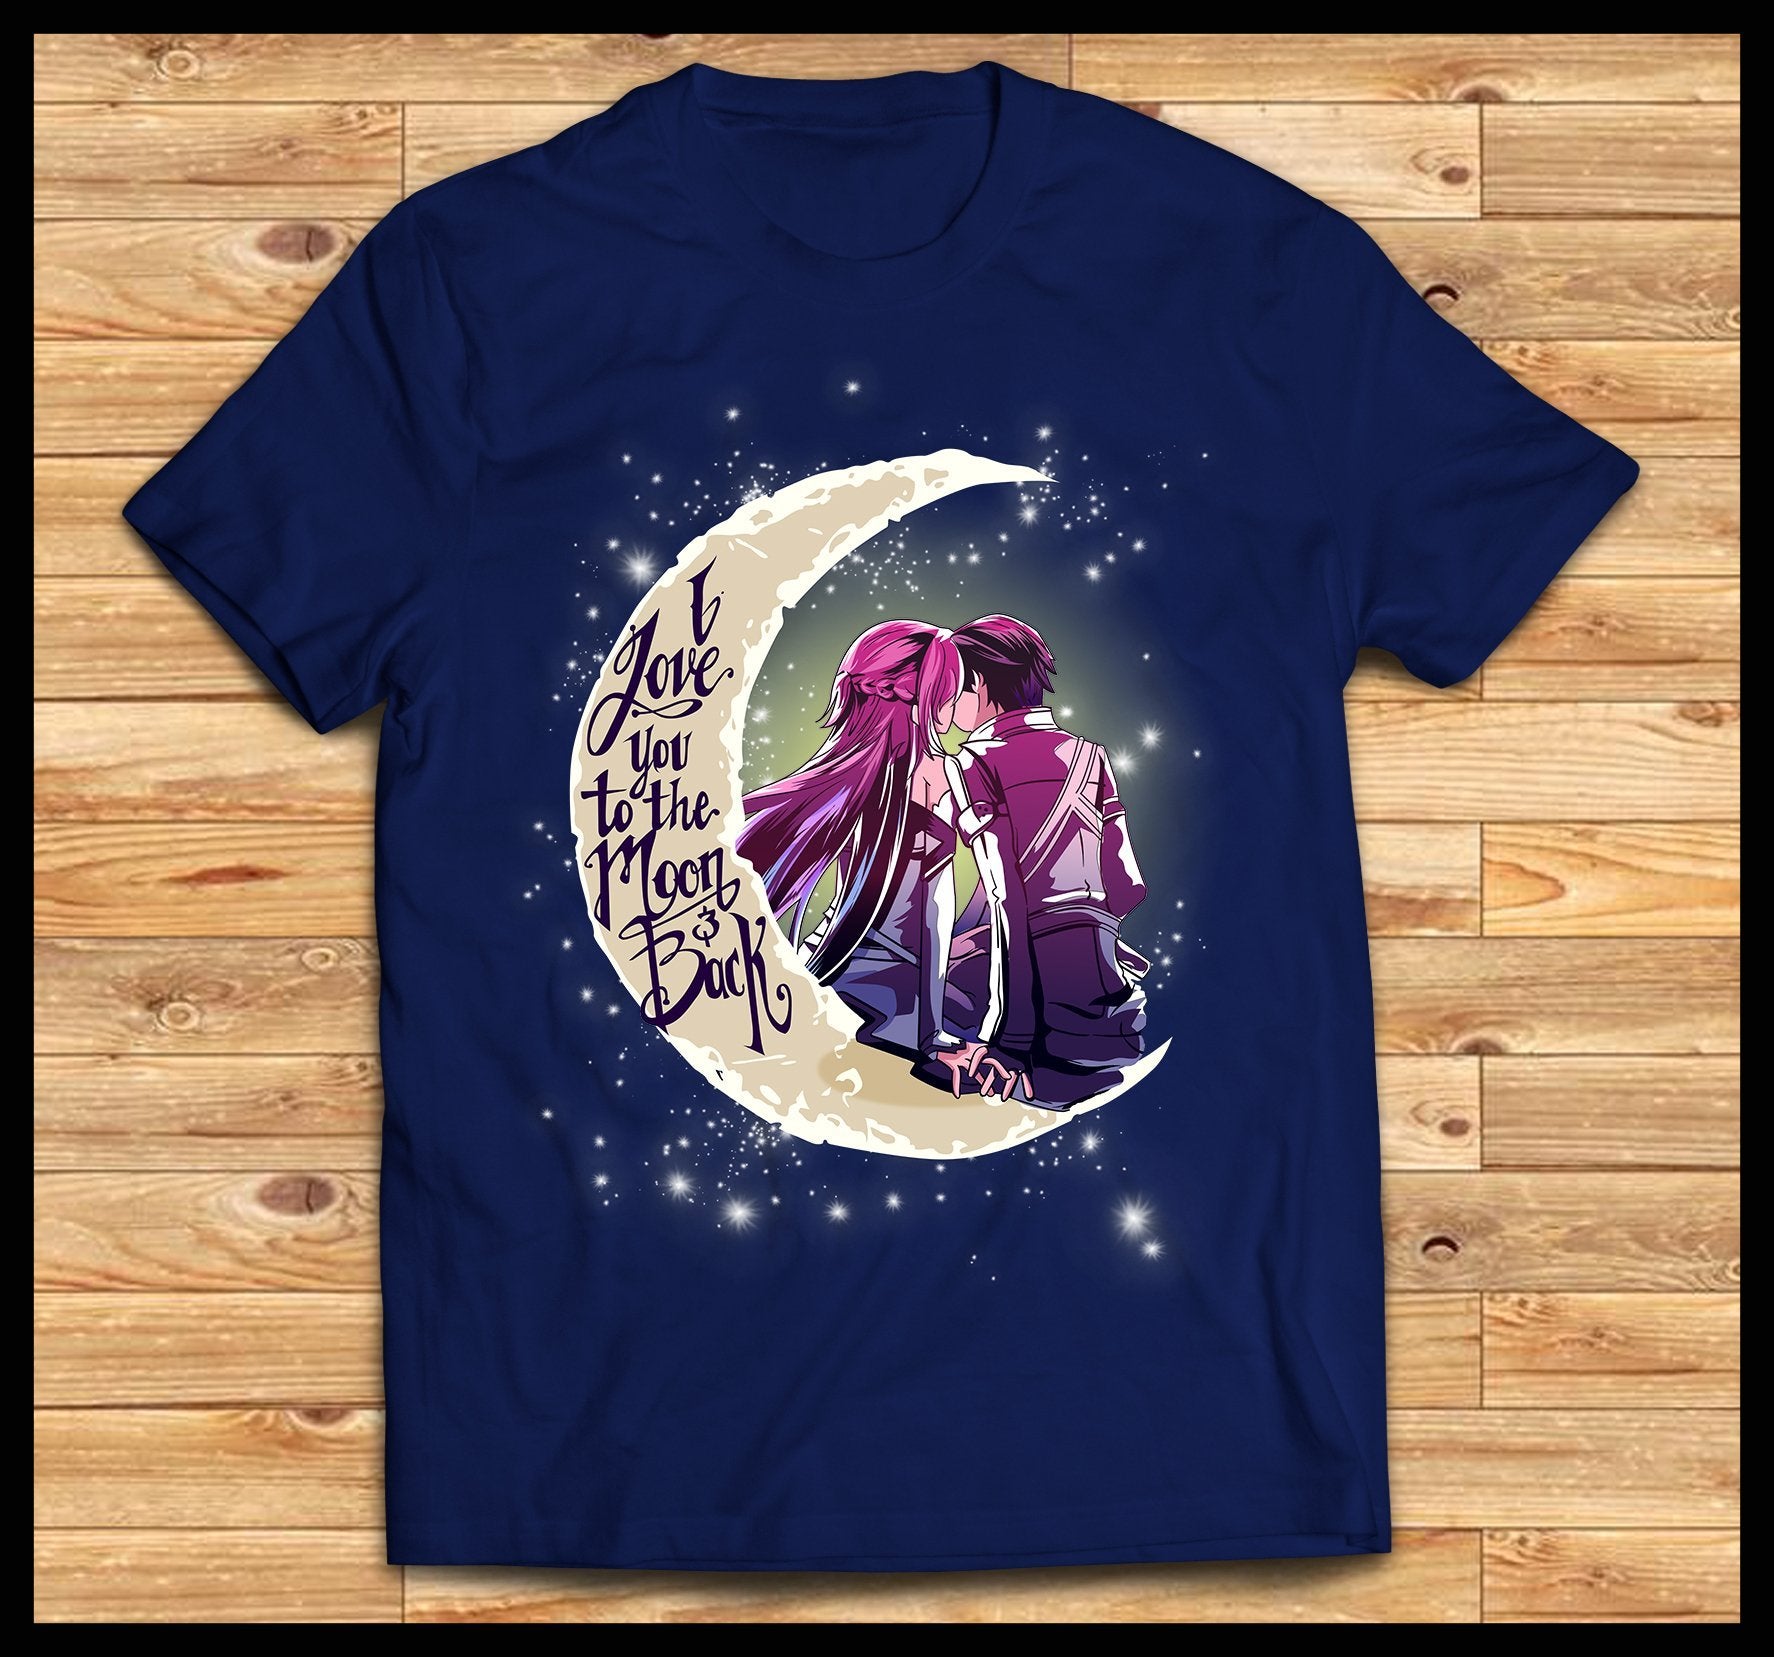 Kirito & Asuna Shirt 10